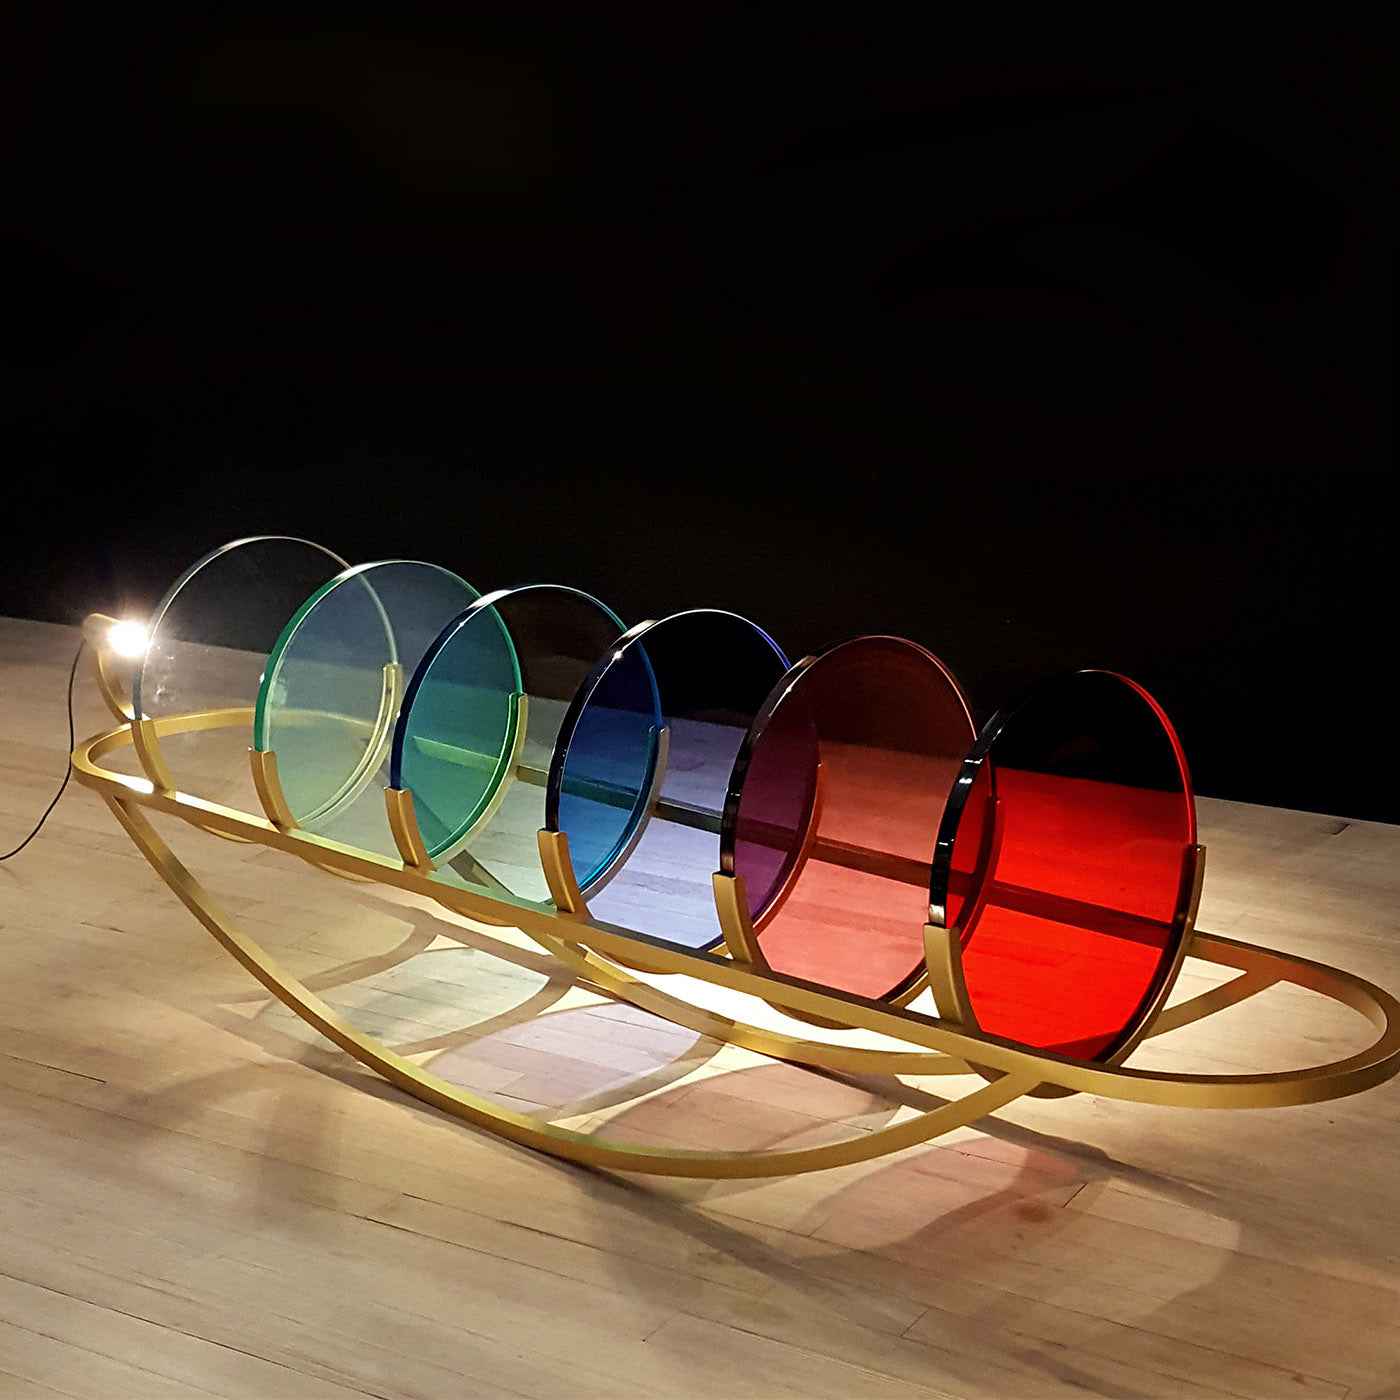 Dondolo Table Lamp by Studiopluz - Alternative view 1